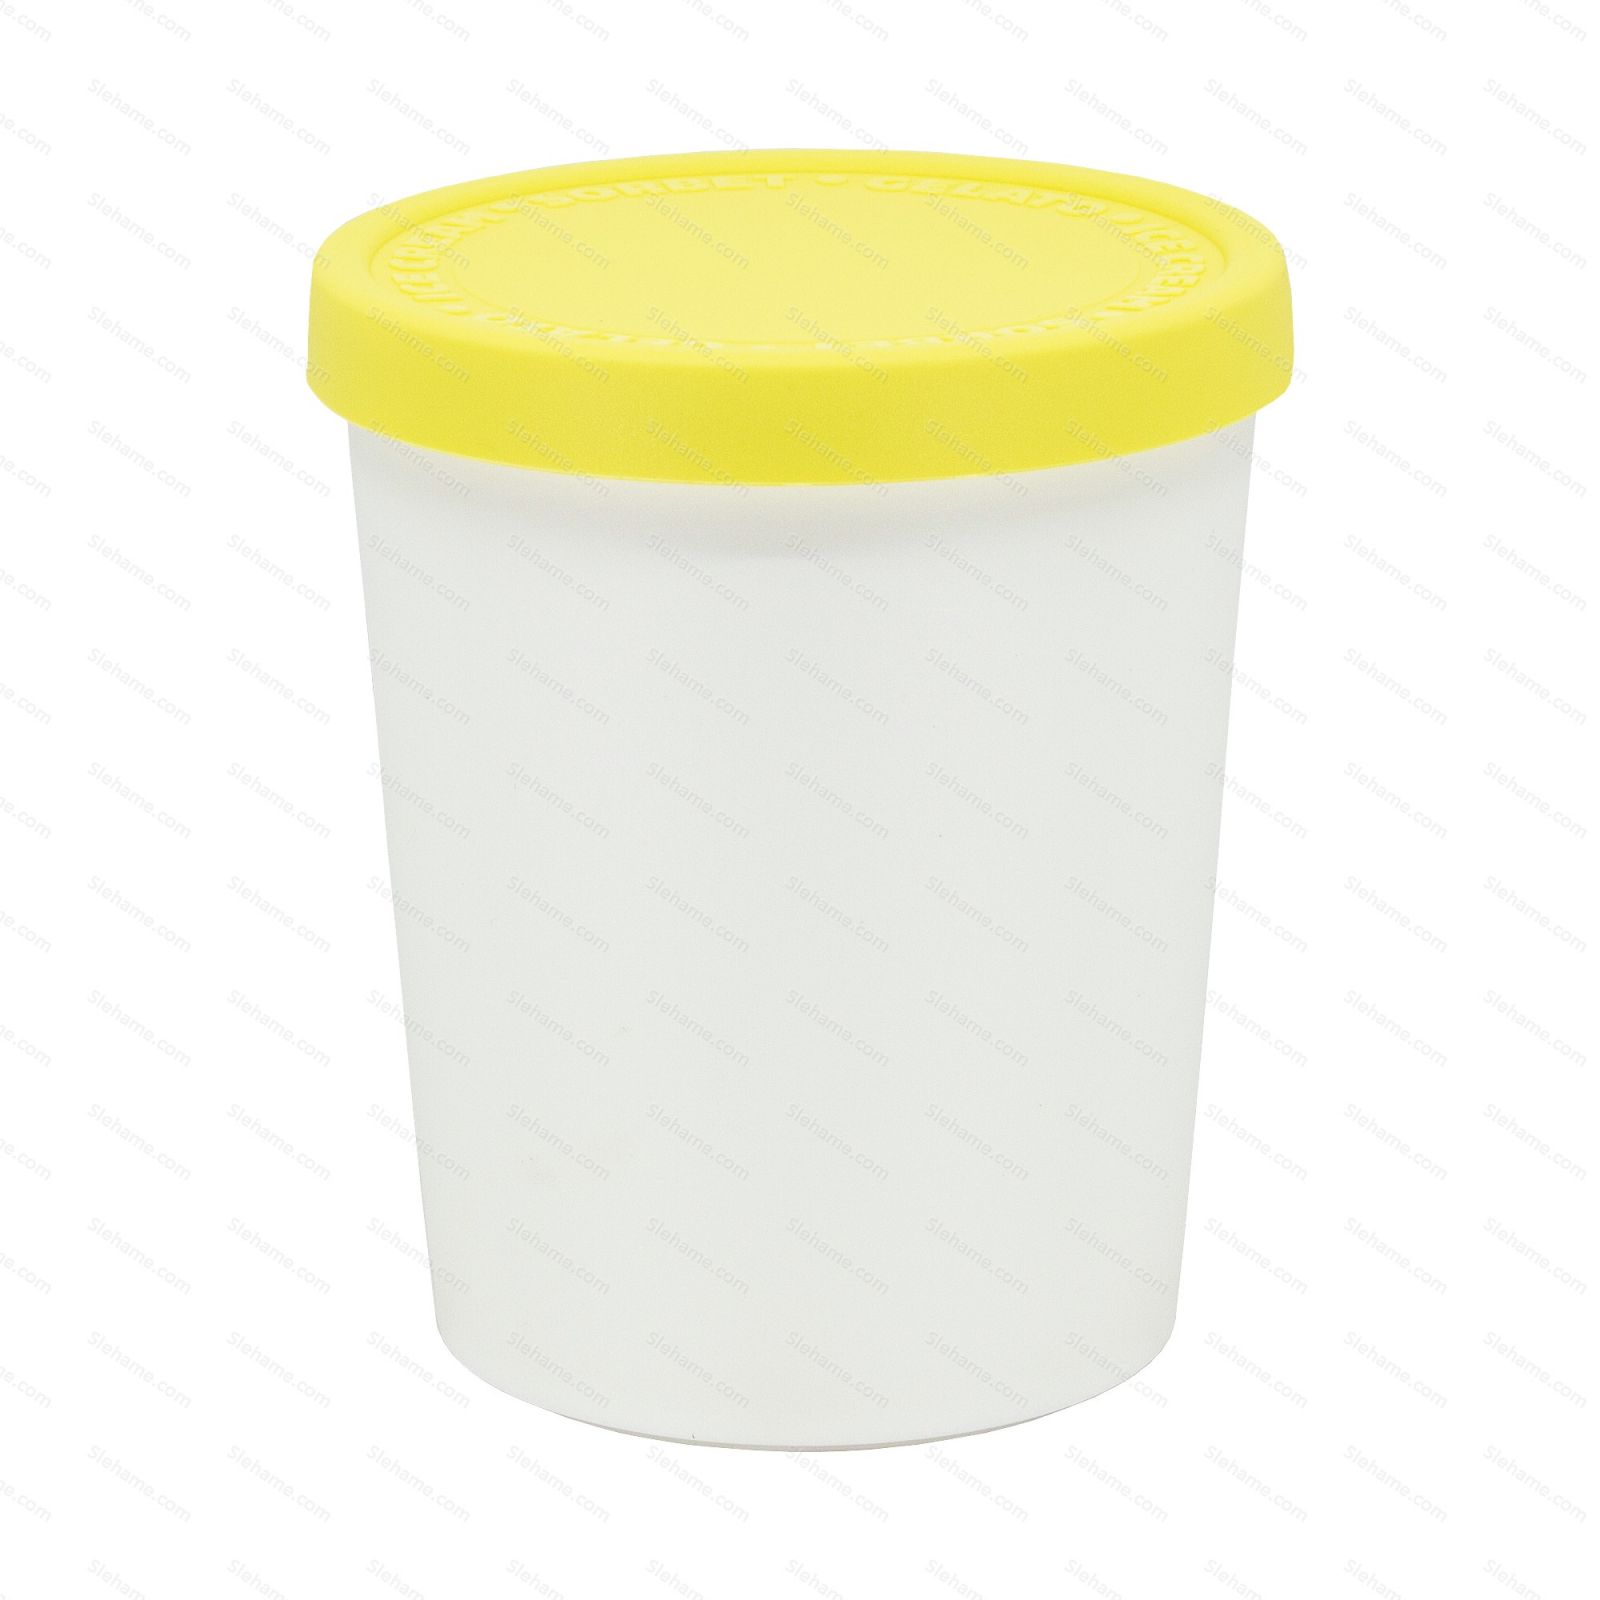 Ice cream tub Tovolo SWEET TREAT 1.0 l, lemon - produkt